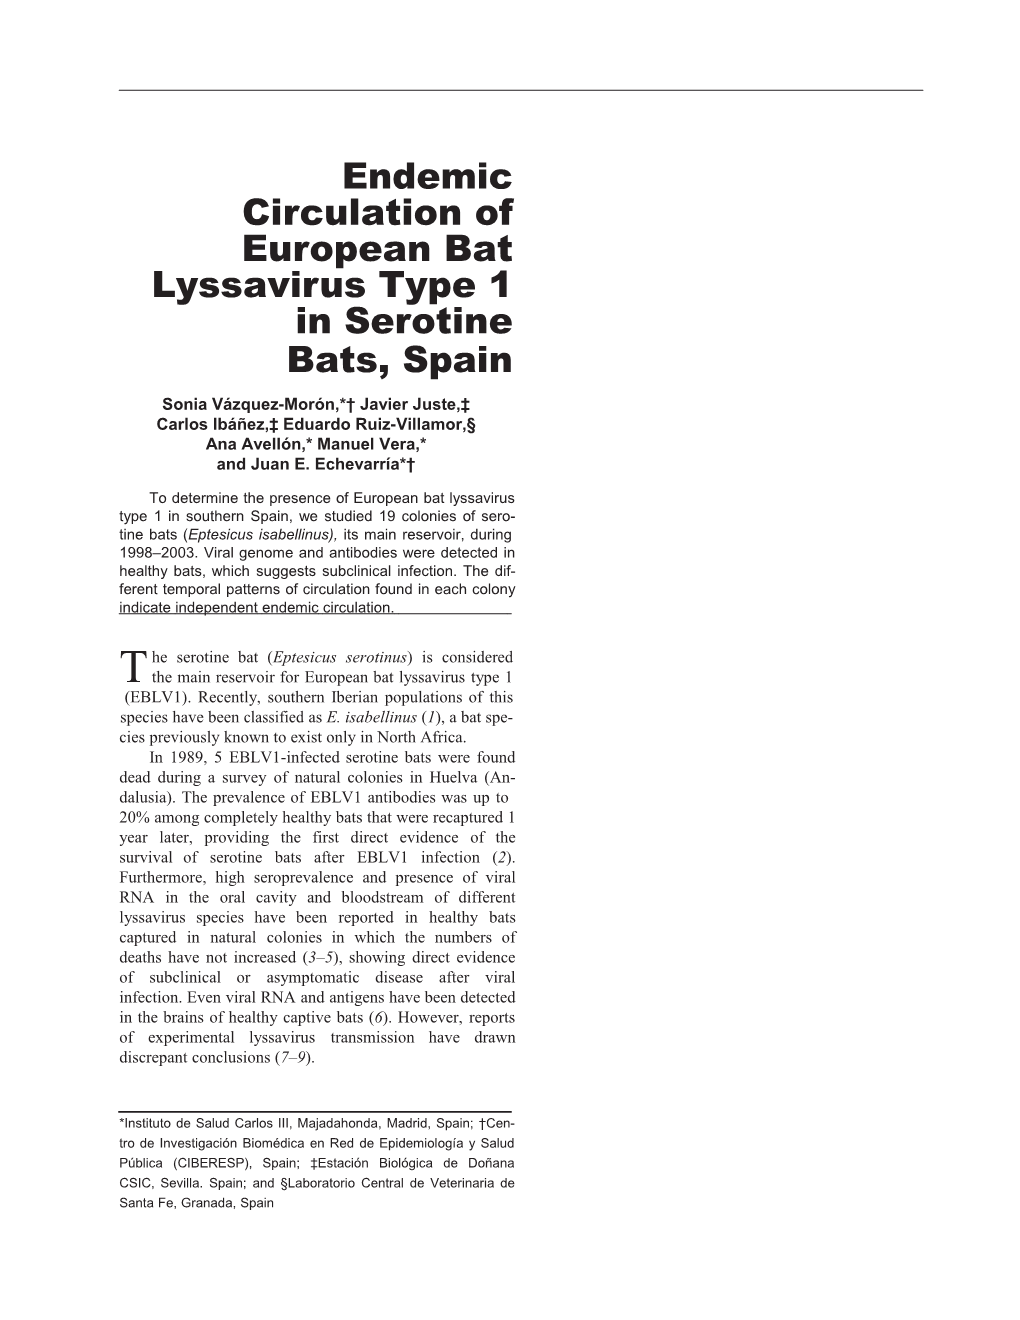 Endemic Circulation of Europeanbat Lyssavirus Type1 in Serotine